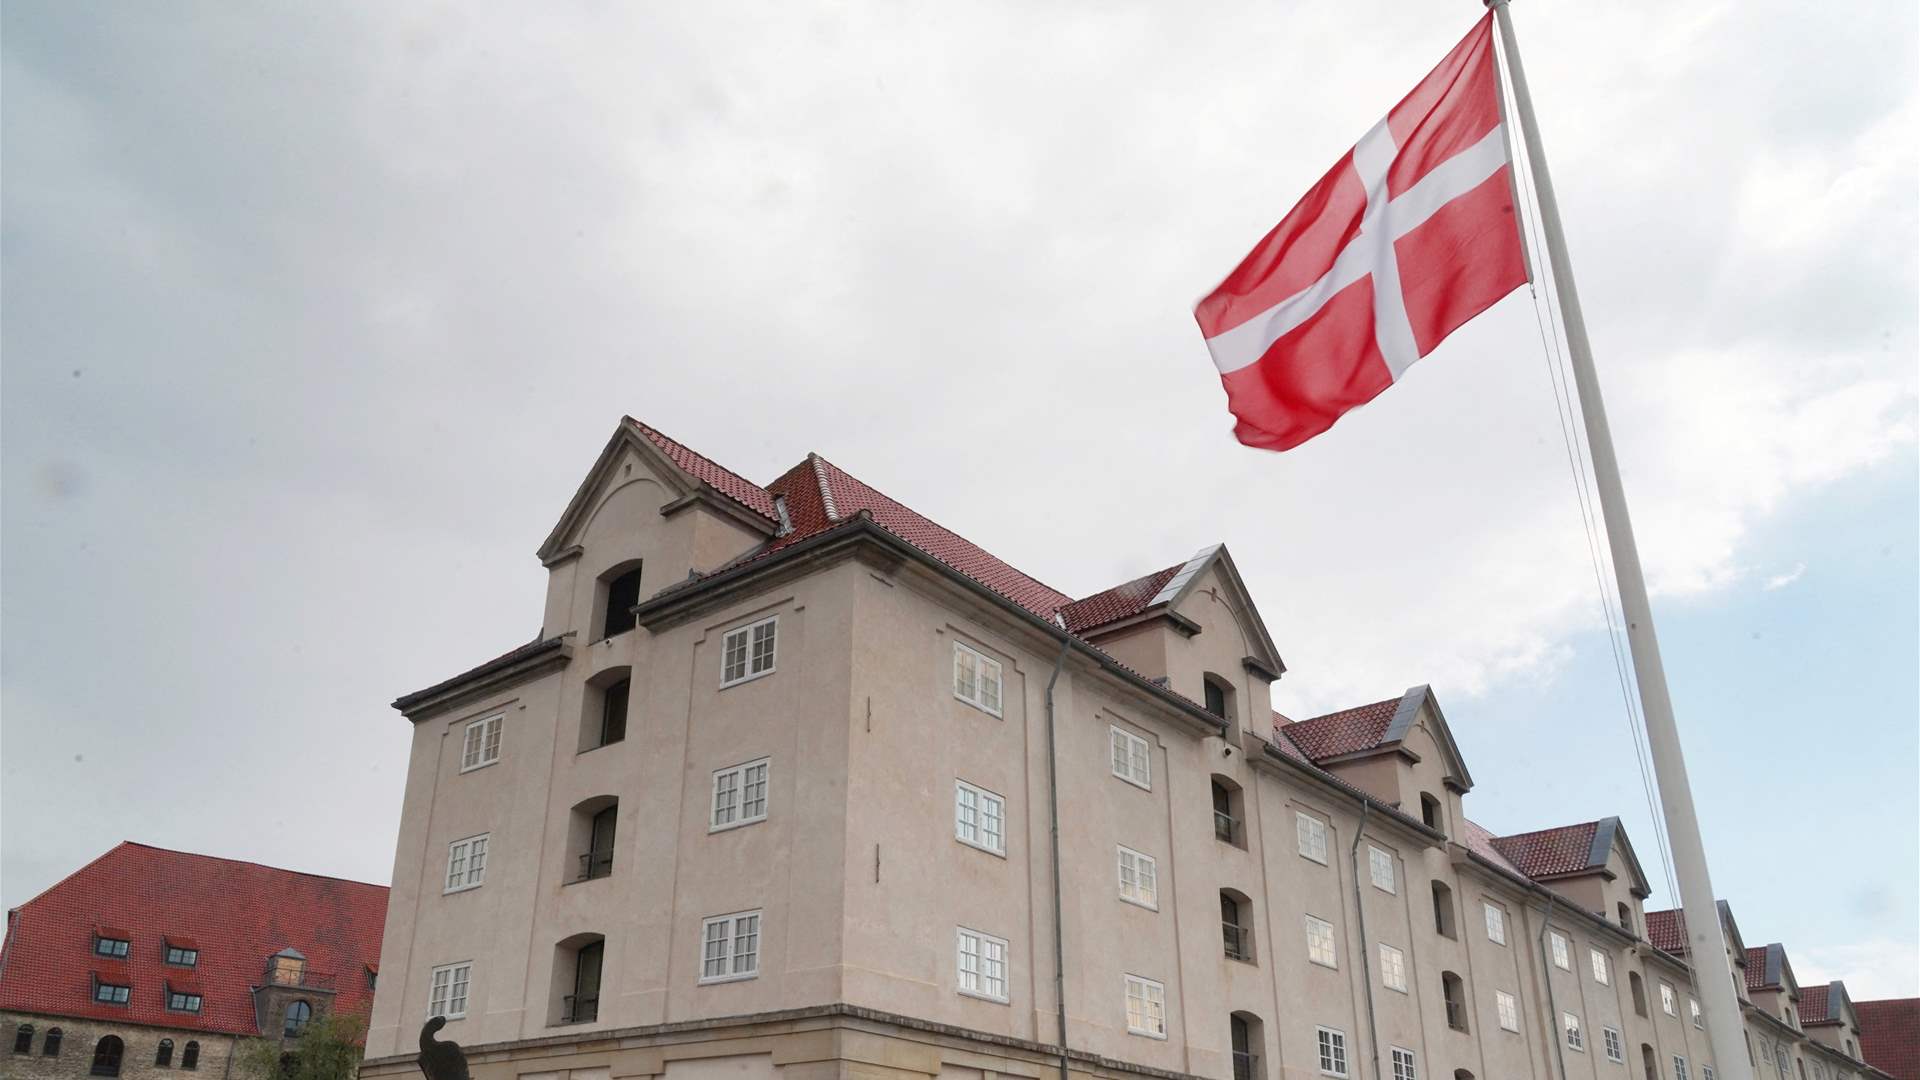 Denmark to end green energy scheme due to EU law conflict